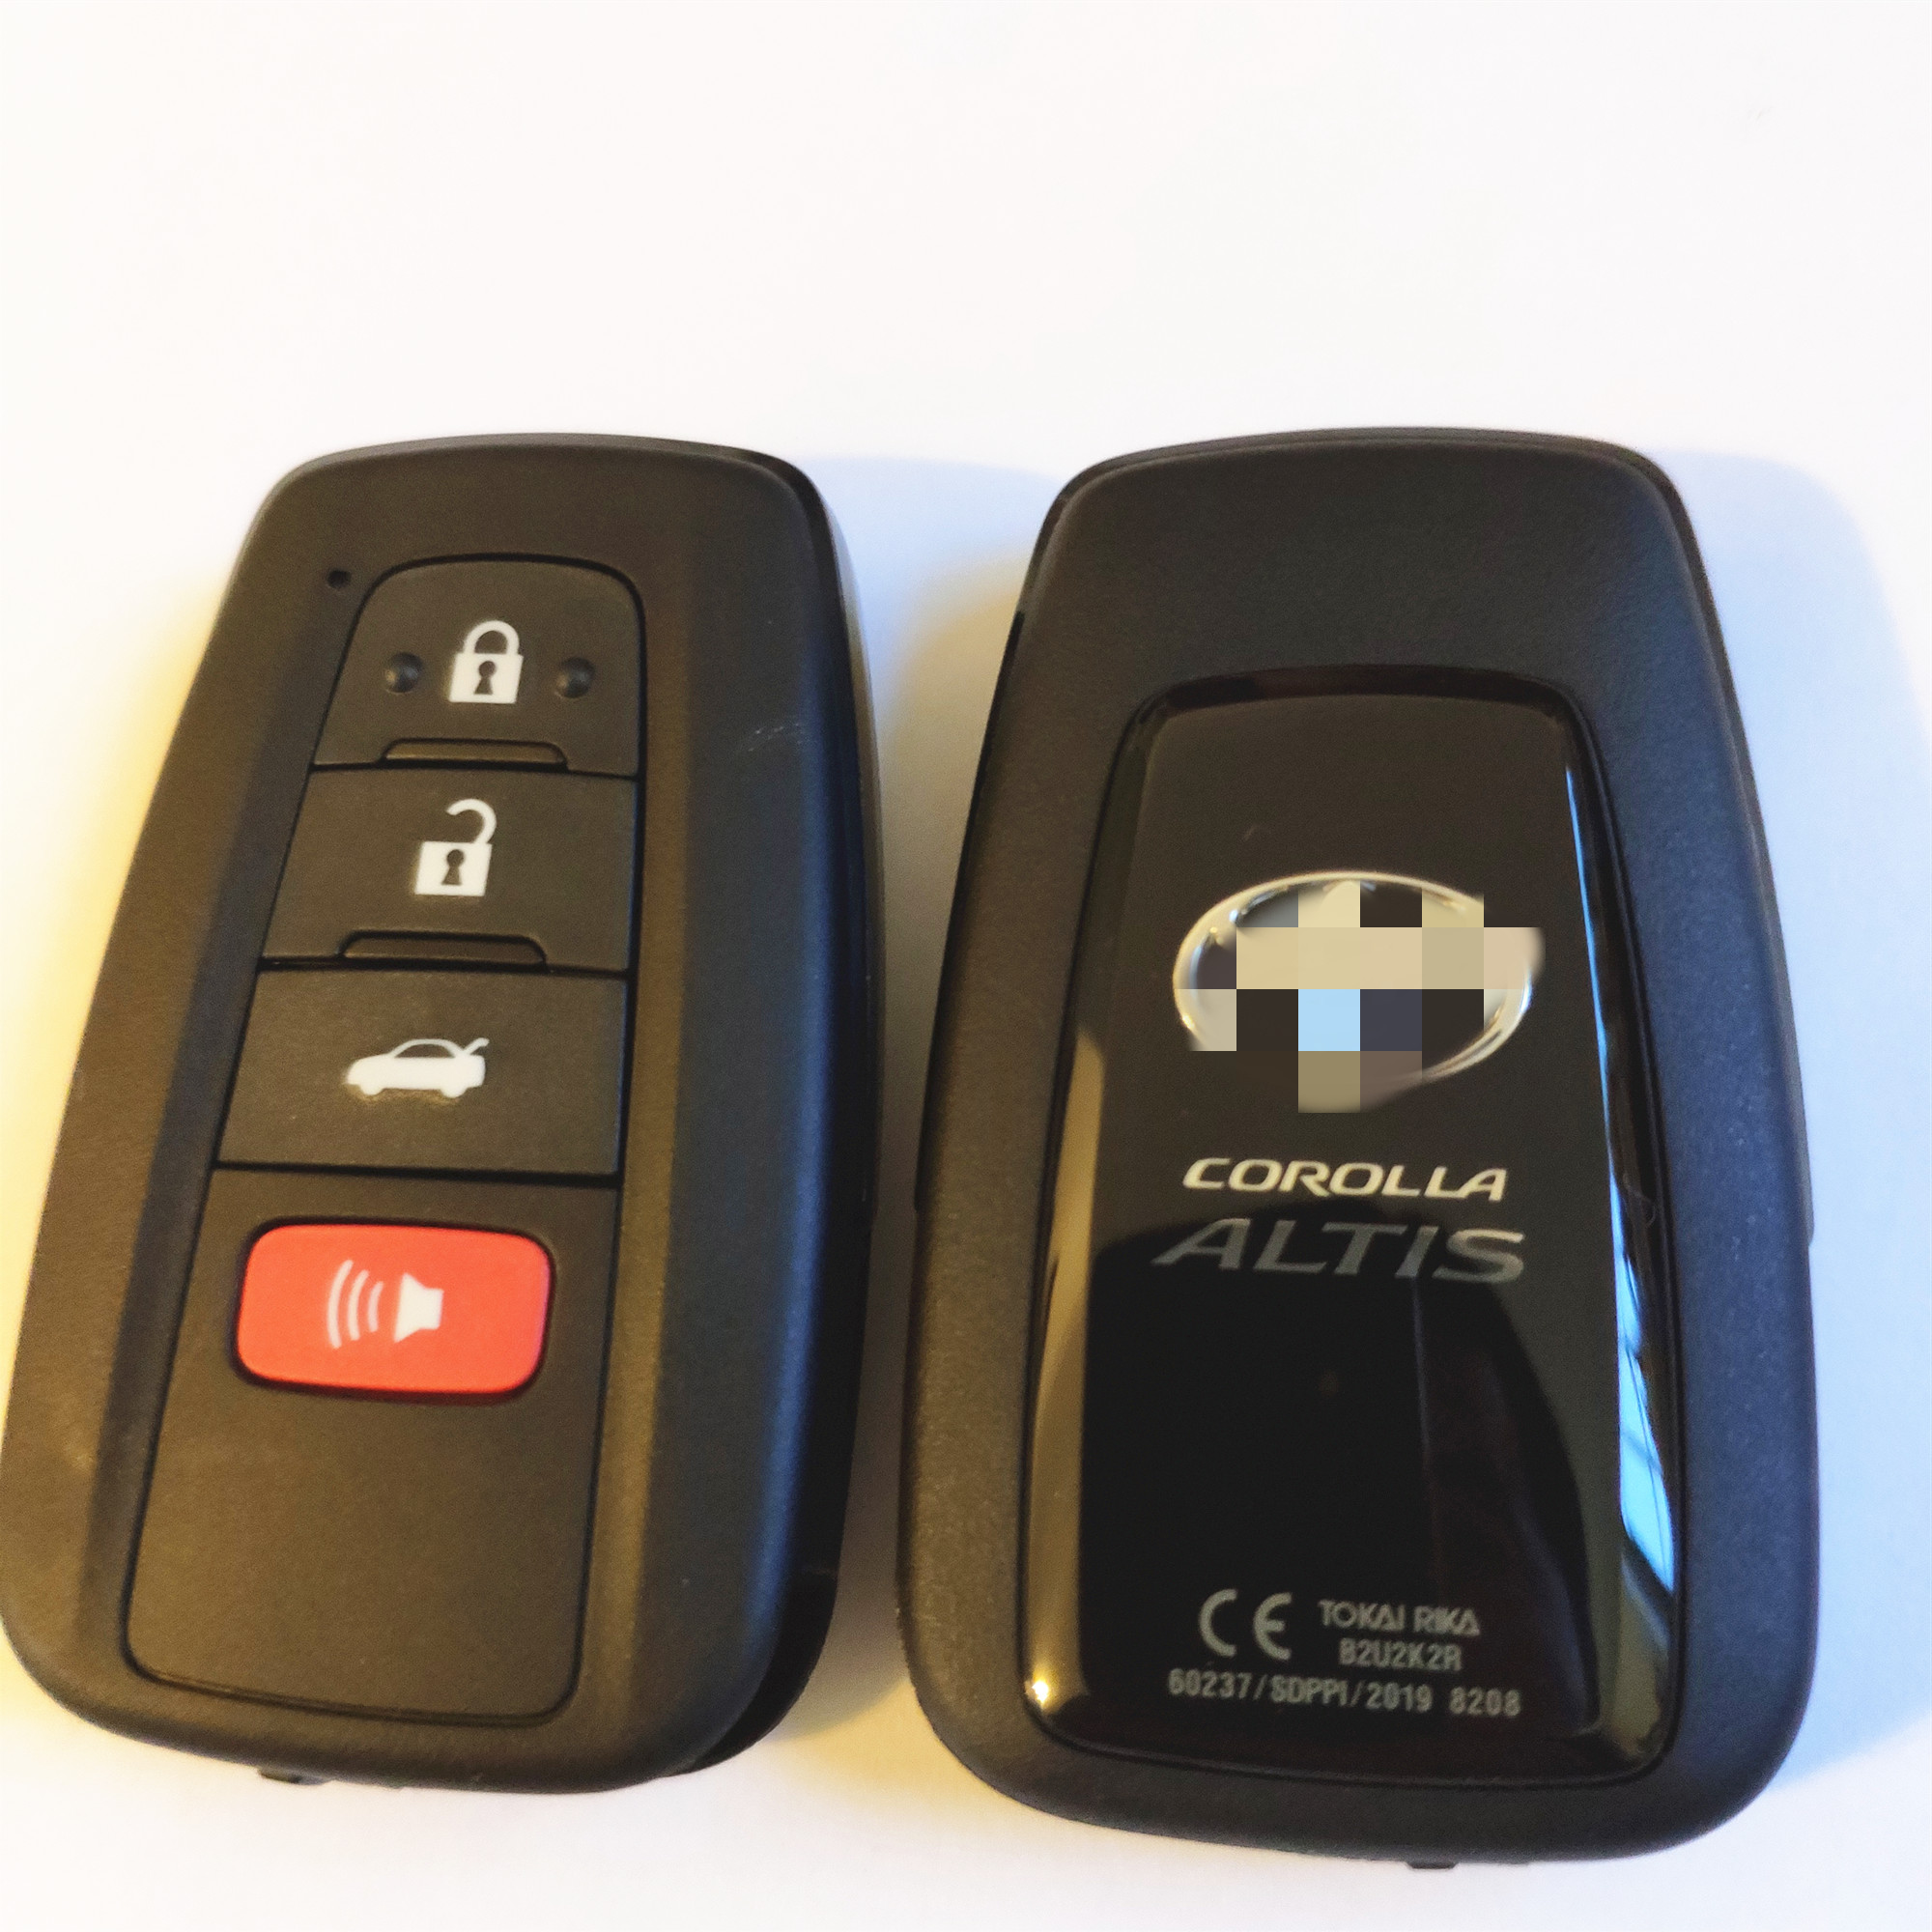 Original 3+1 Buttons 434 MHz Smart Key for Toyota Corolla Altis - TOKAI RIKA B2U2K2R - 60237/SDPPI/2019 8208 - 61E466-0010